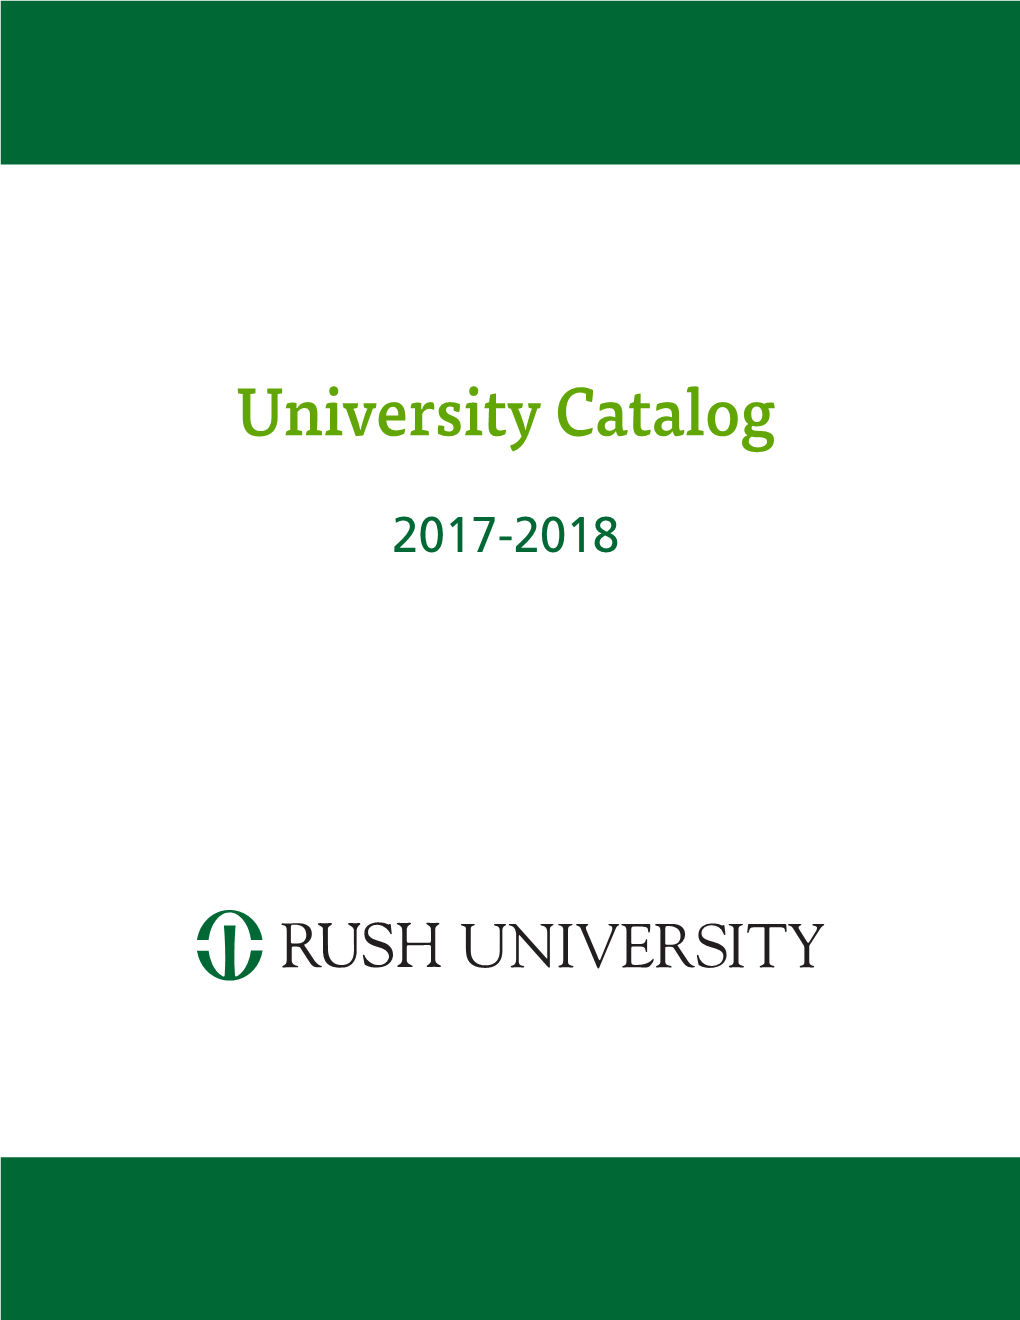 2017-2018 Rush University Catalog.Pdf